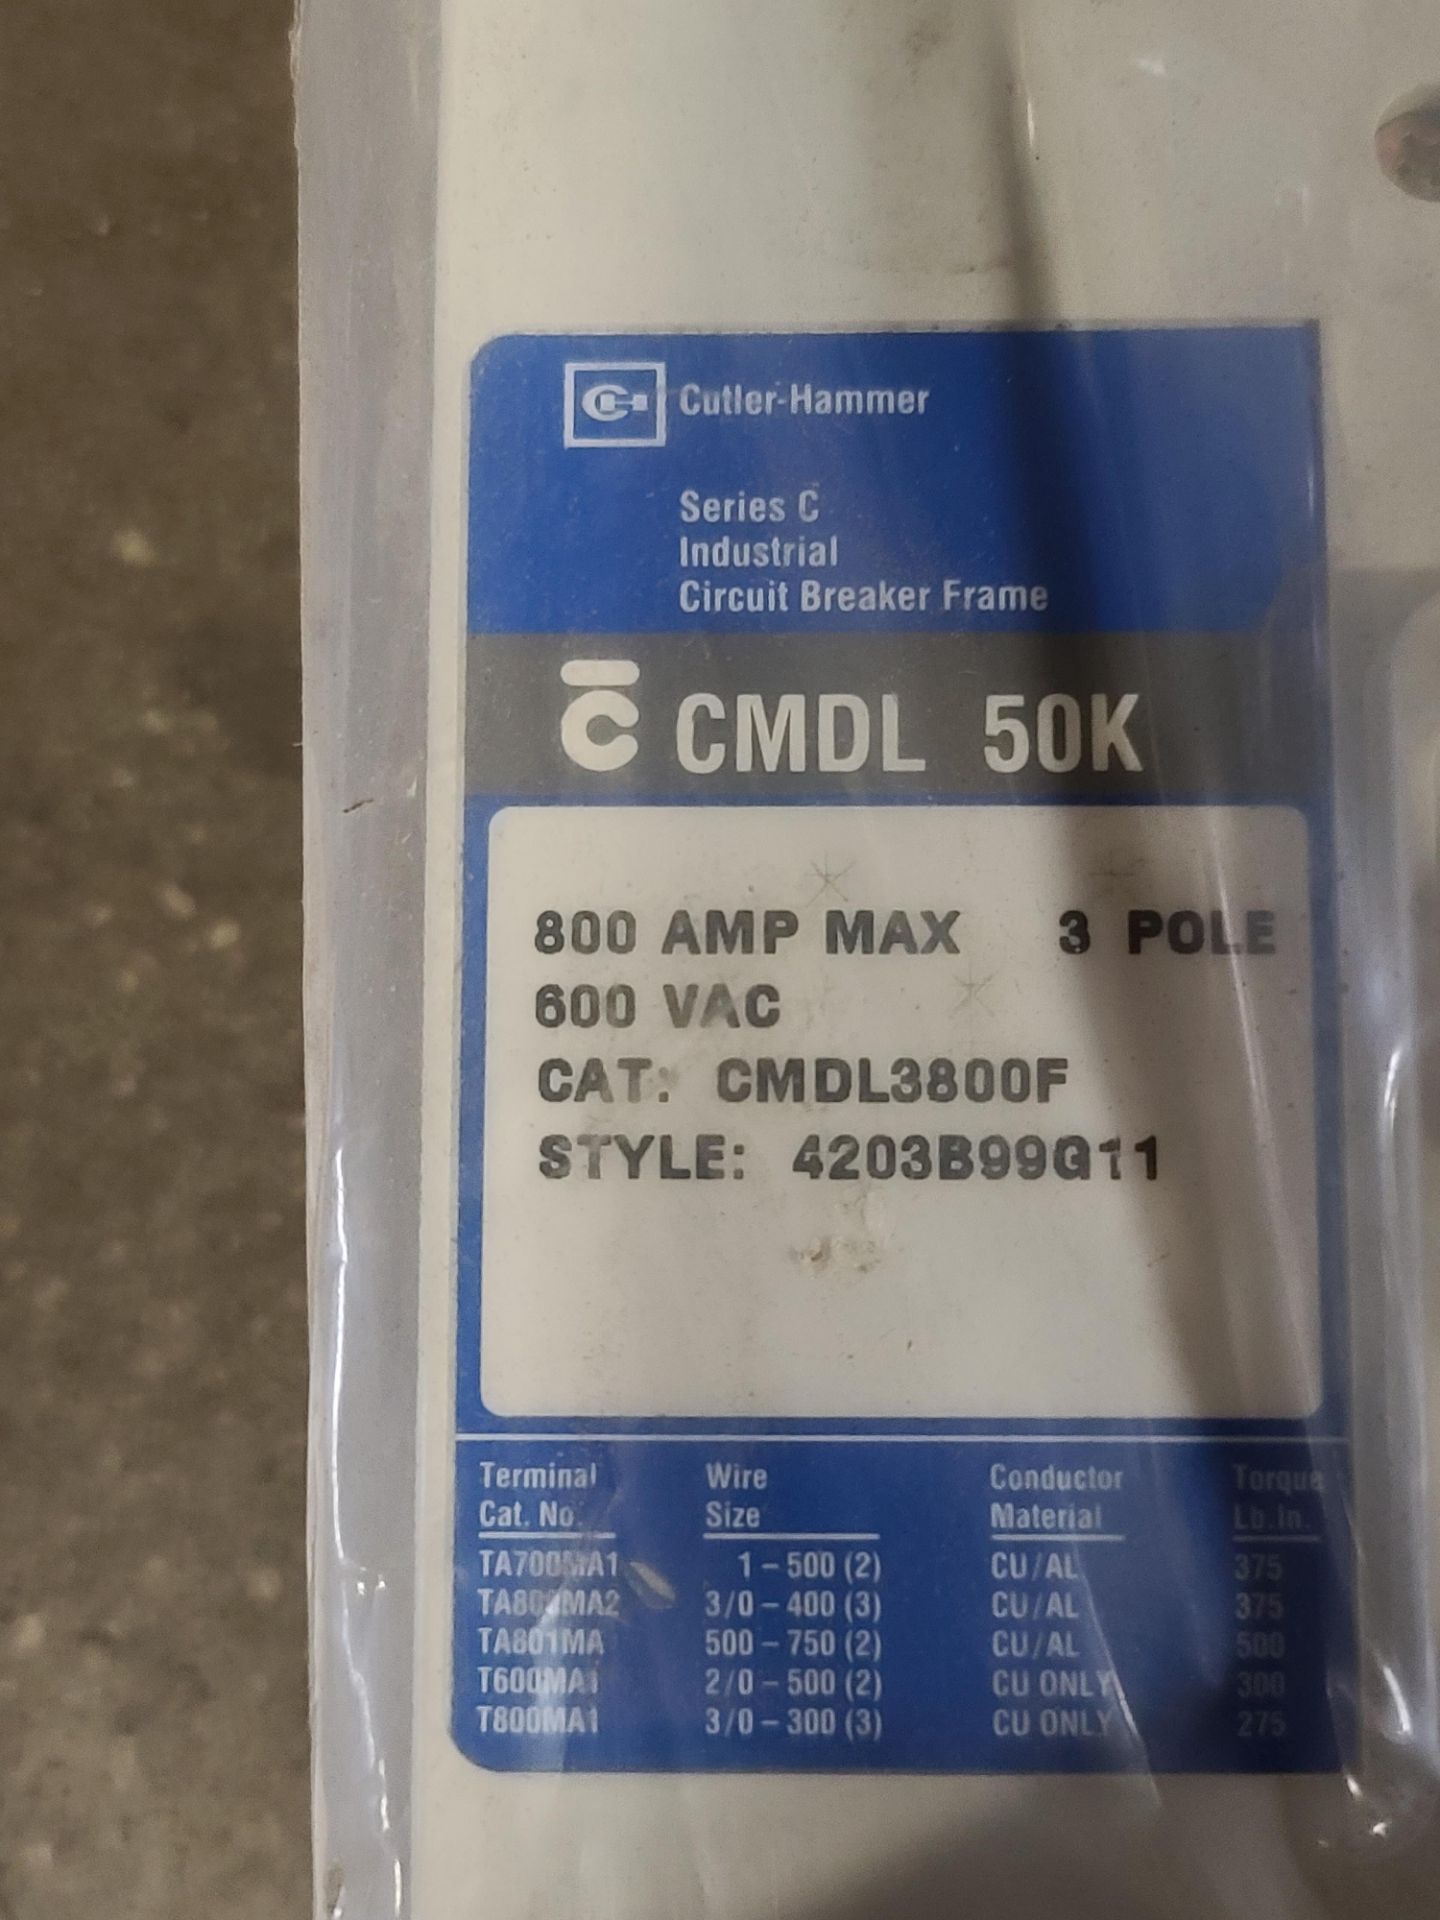 Cutler-Hammer 800 Amp, Cat CMDL30800F "S" - Image 2 of 2